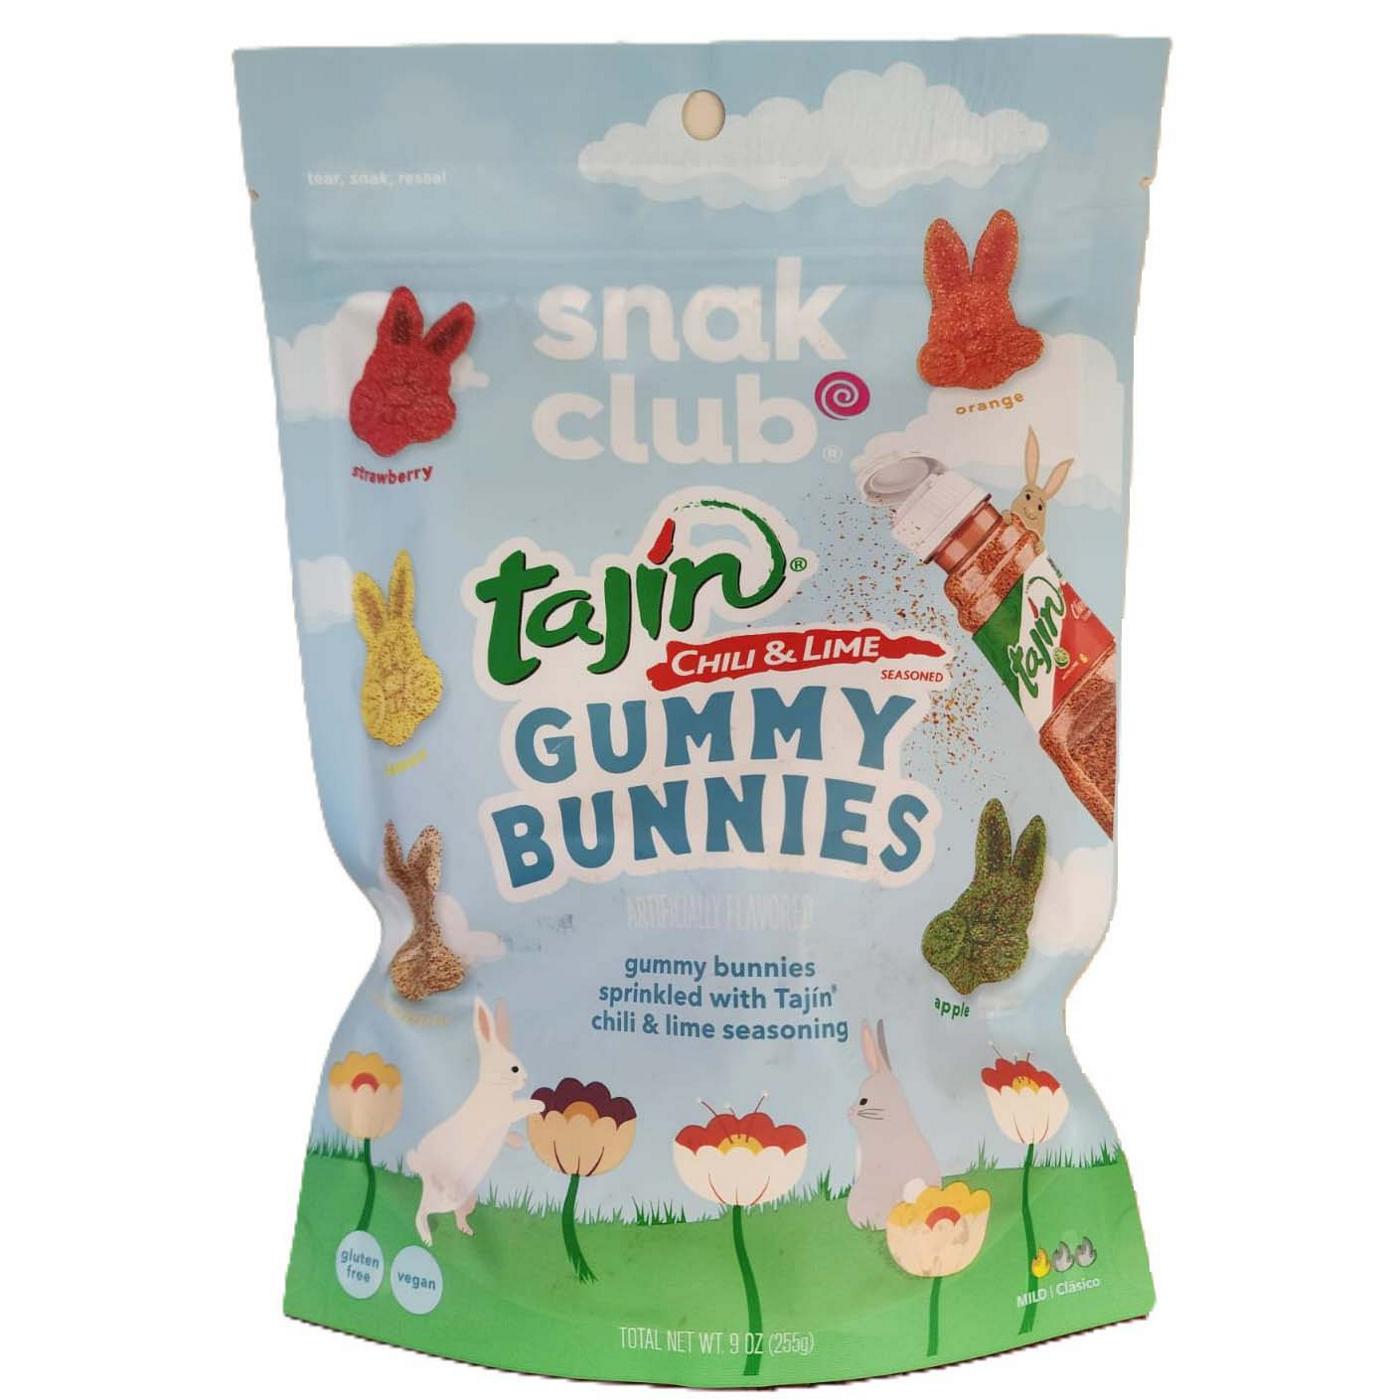 Snak Club Tajin Bunny Gummies; image 1 of 2